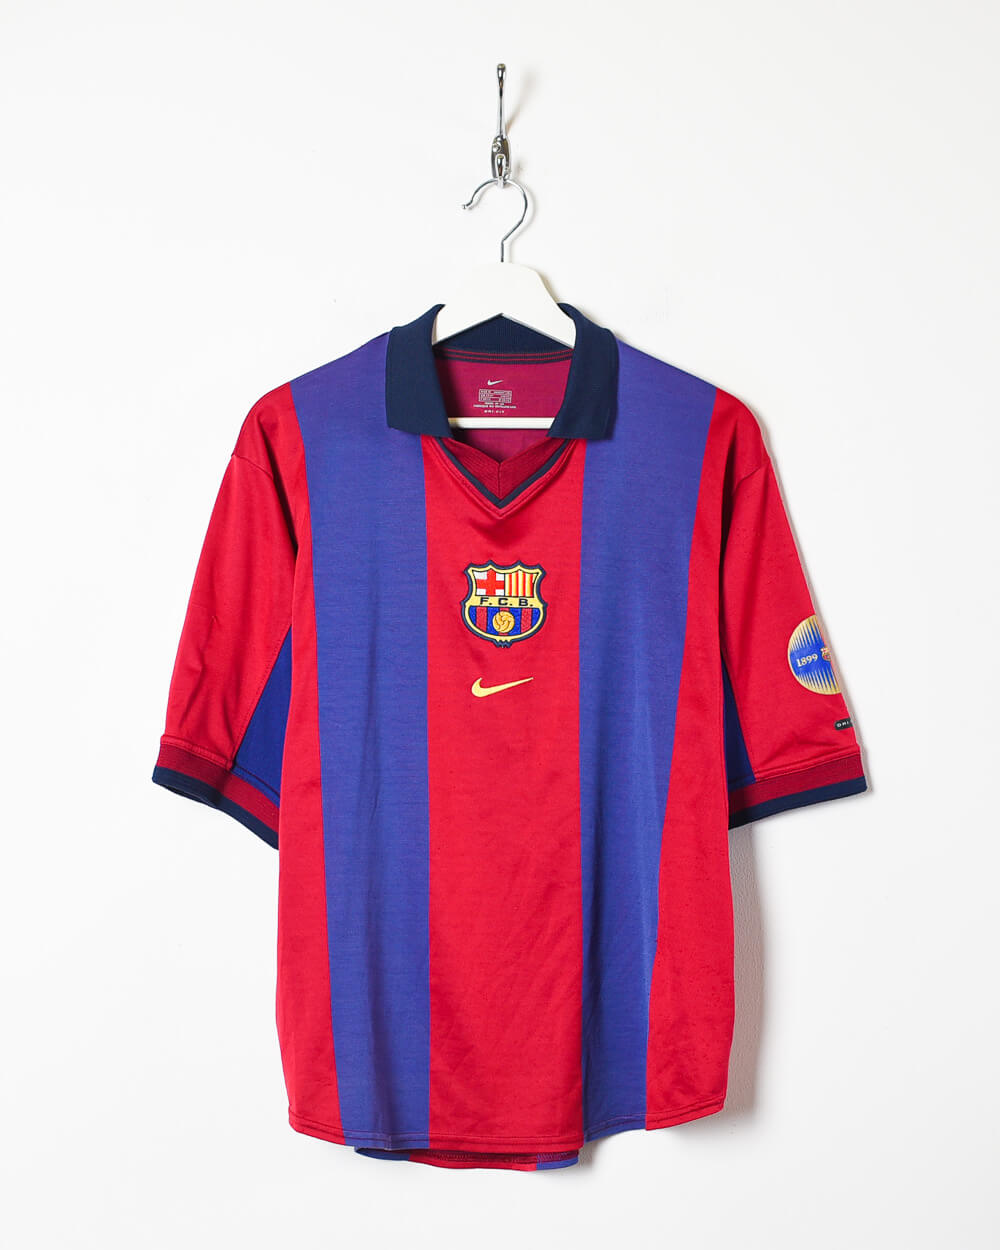 Red Nike 1998/99 FC Barcelona #11 Tameris 100 Years Home Shirt - Small